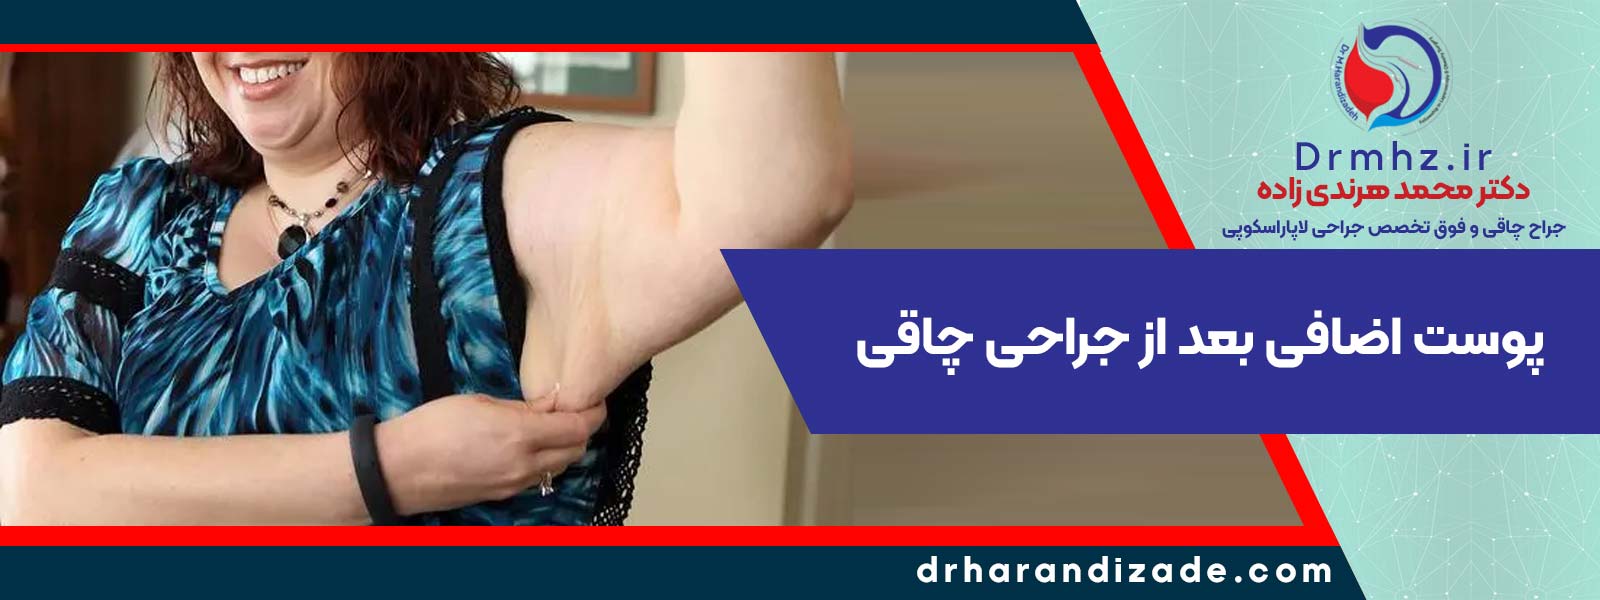 9 excessskin after bariatric surgery - بهترین دکتر لاغری در اصفهان